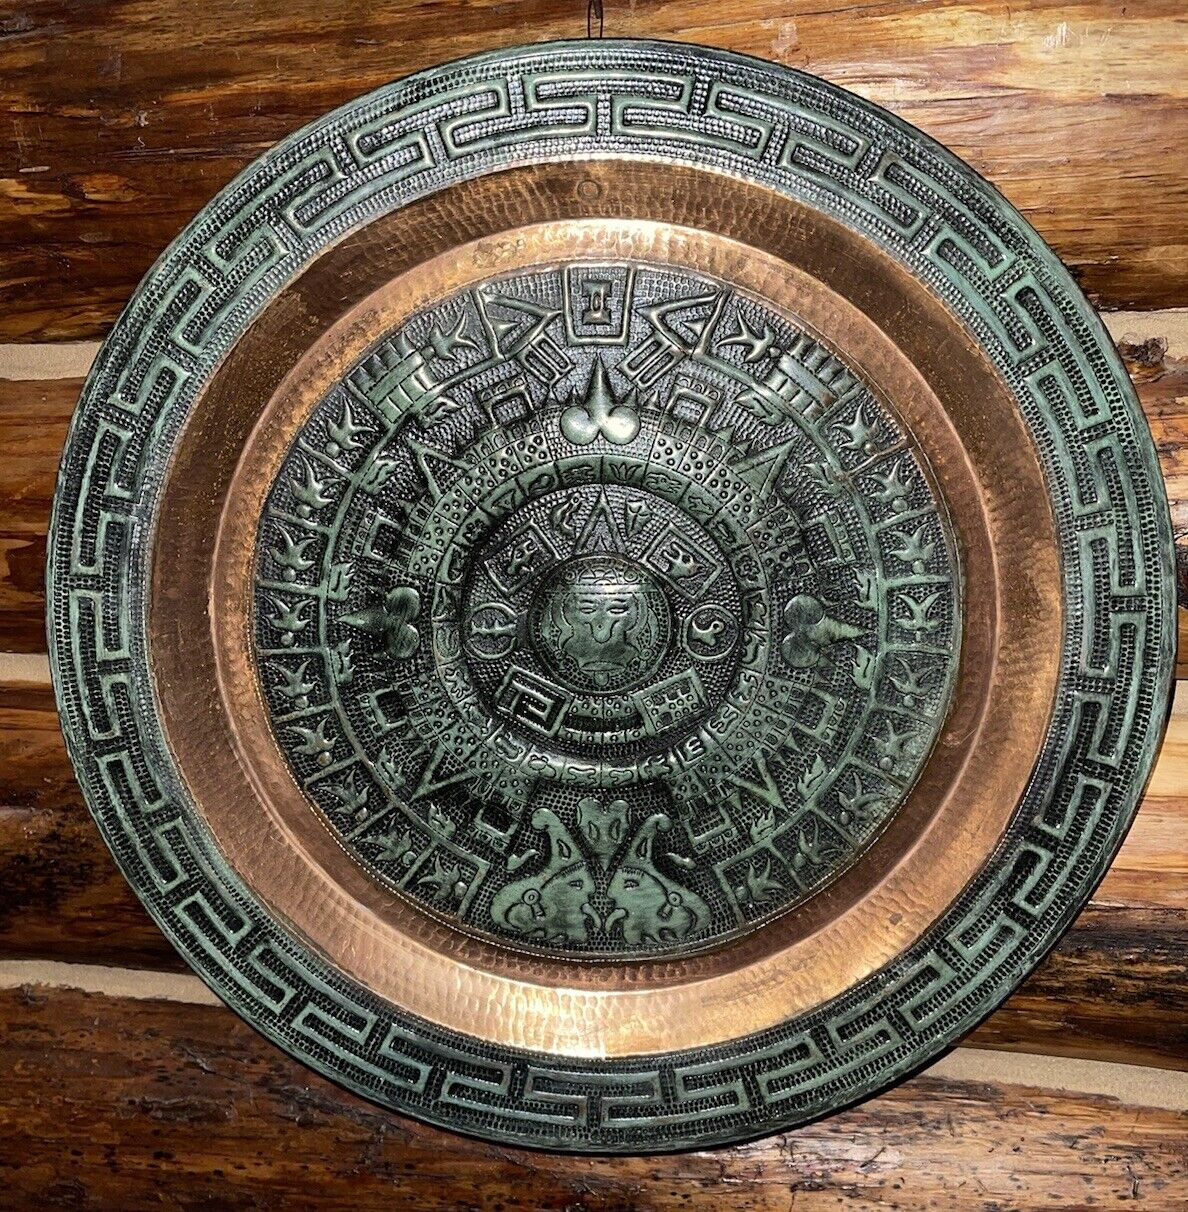 Hammered Copper - Aztec Mayan Sun Calendar - 19” - Large - Rare